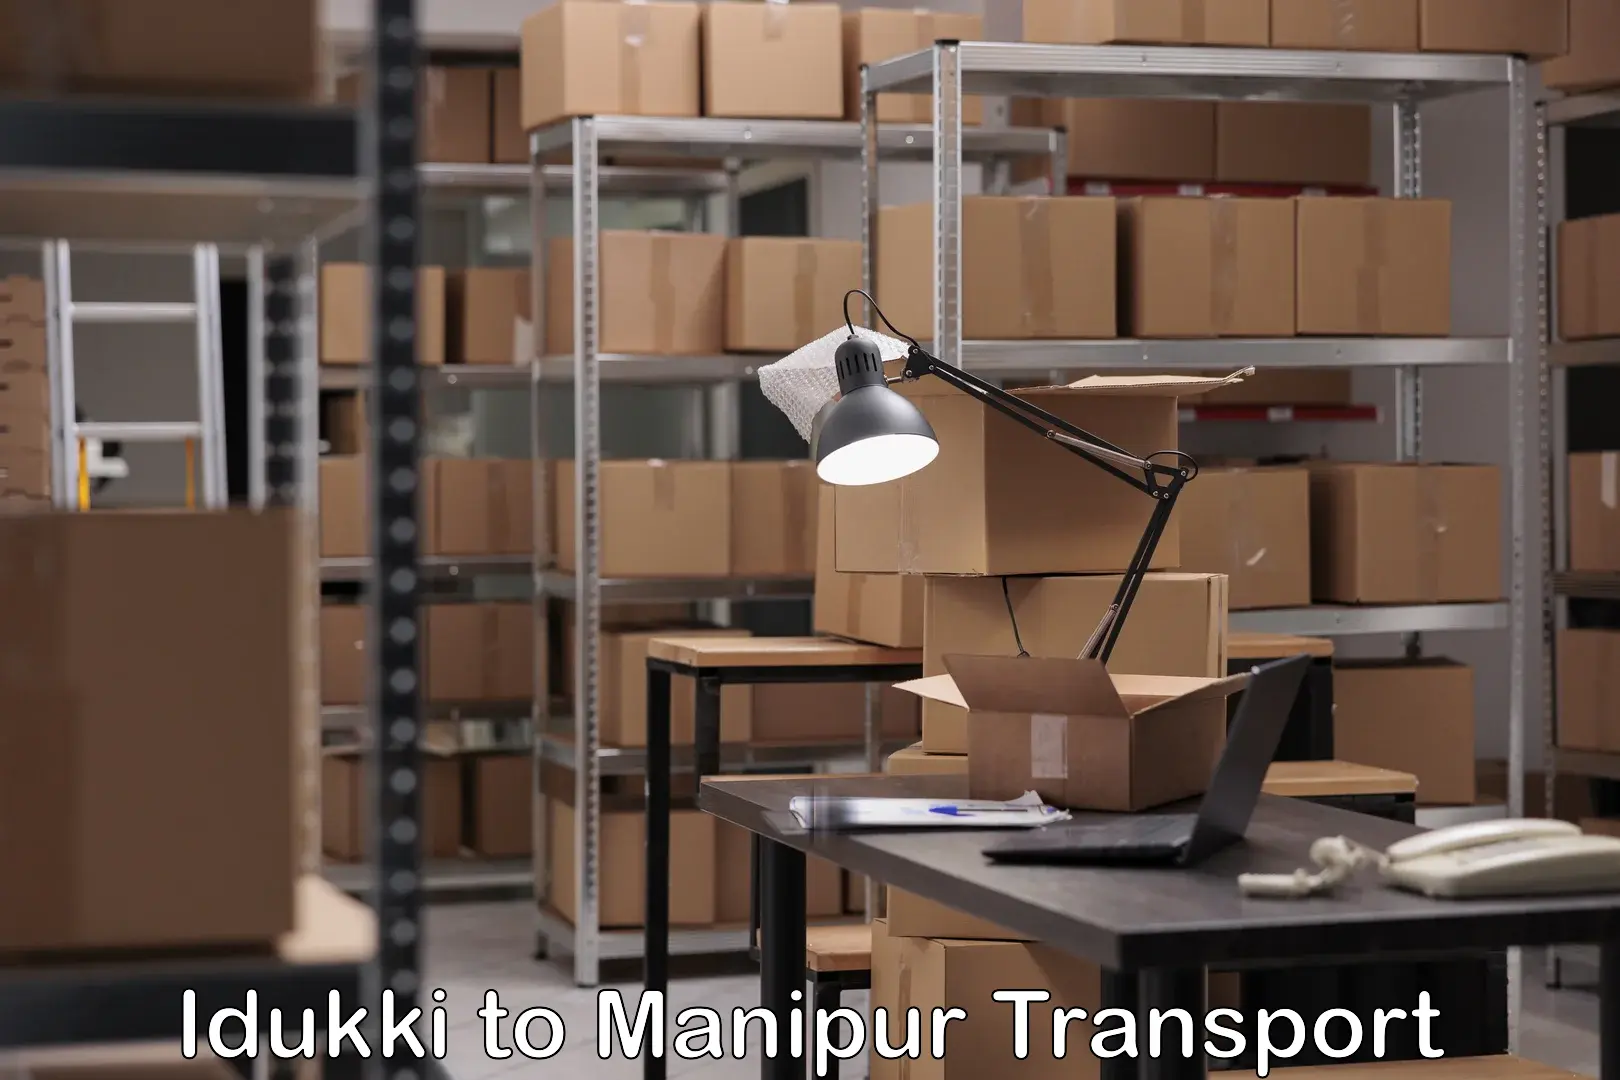 Delivery service Idukki to Manipur